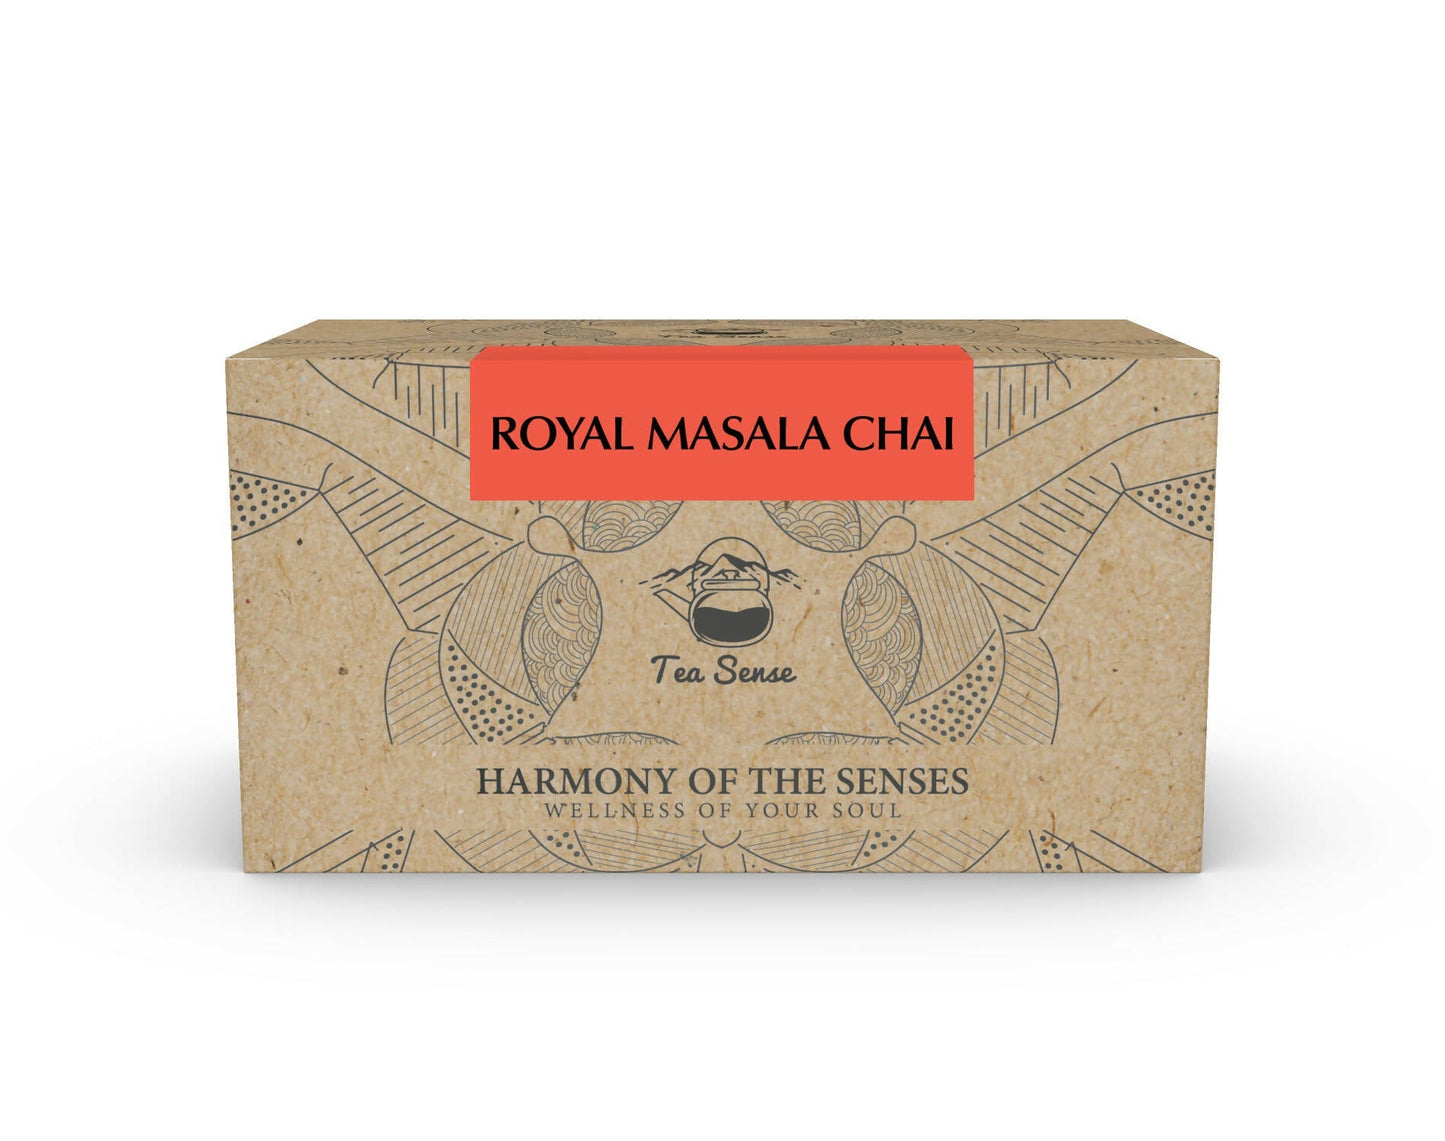 Tea Sense Royal Masala Chai Bags Box - buy in USA, Australia, Canada